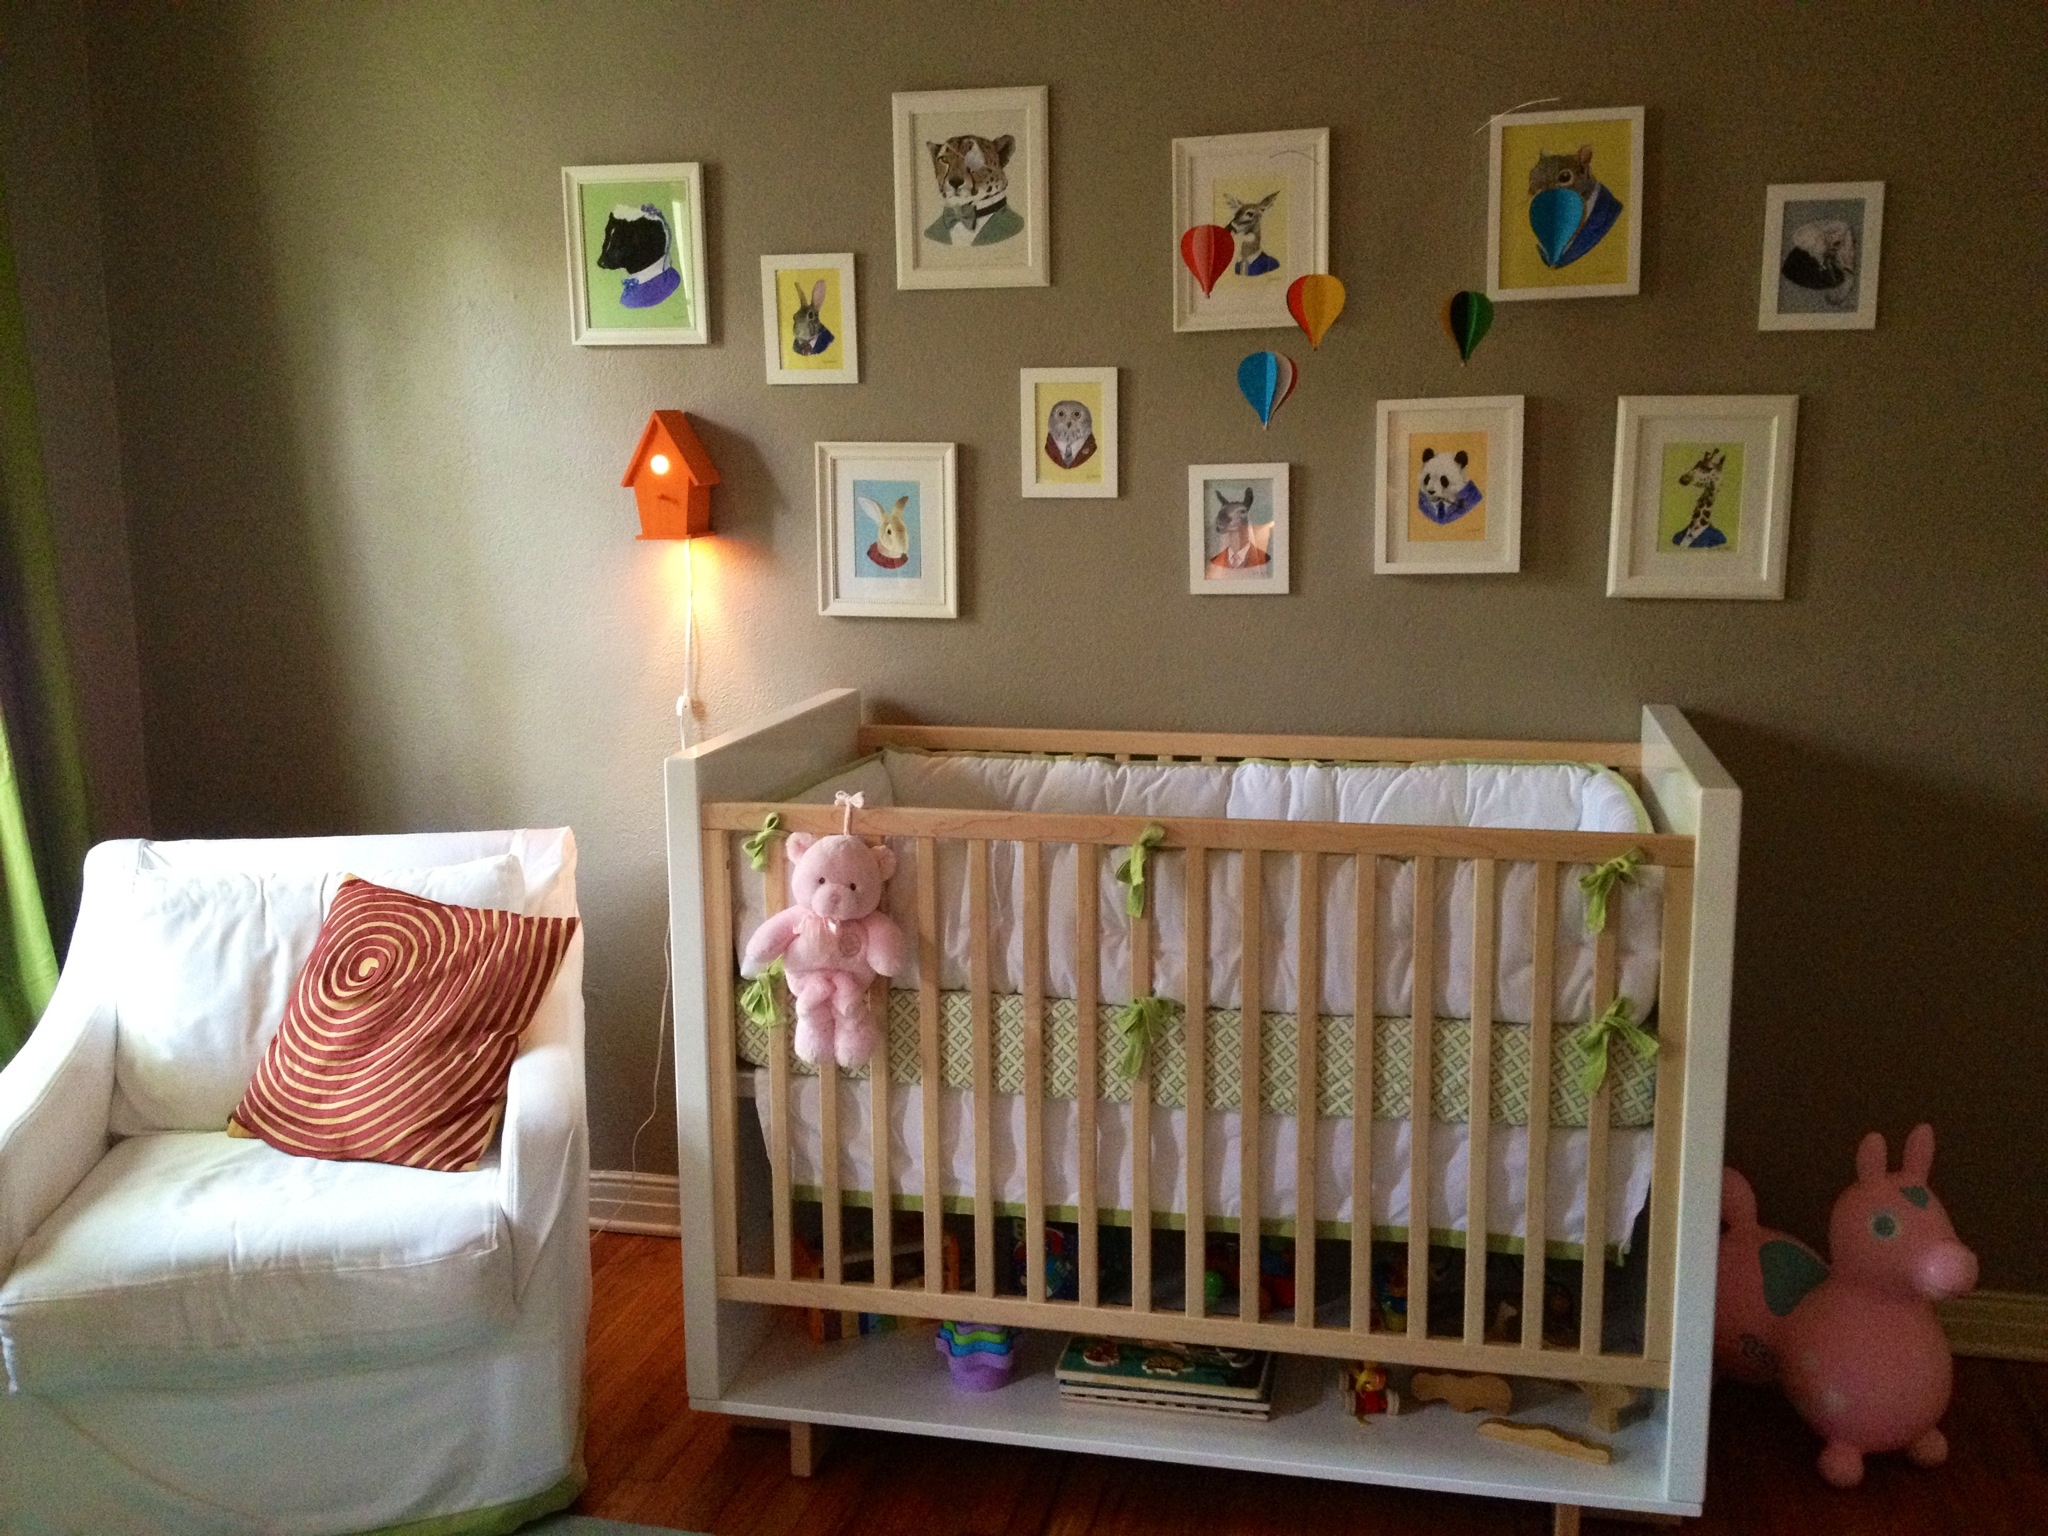 Toddler & Newborn Shared Room - Project Nursery